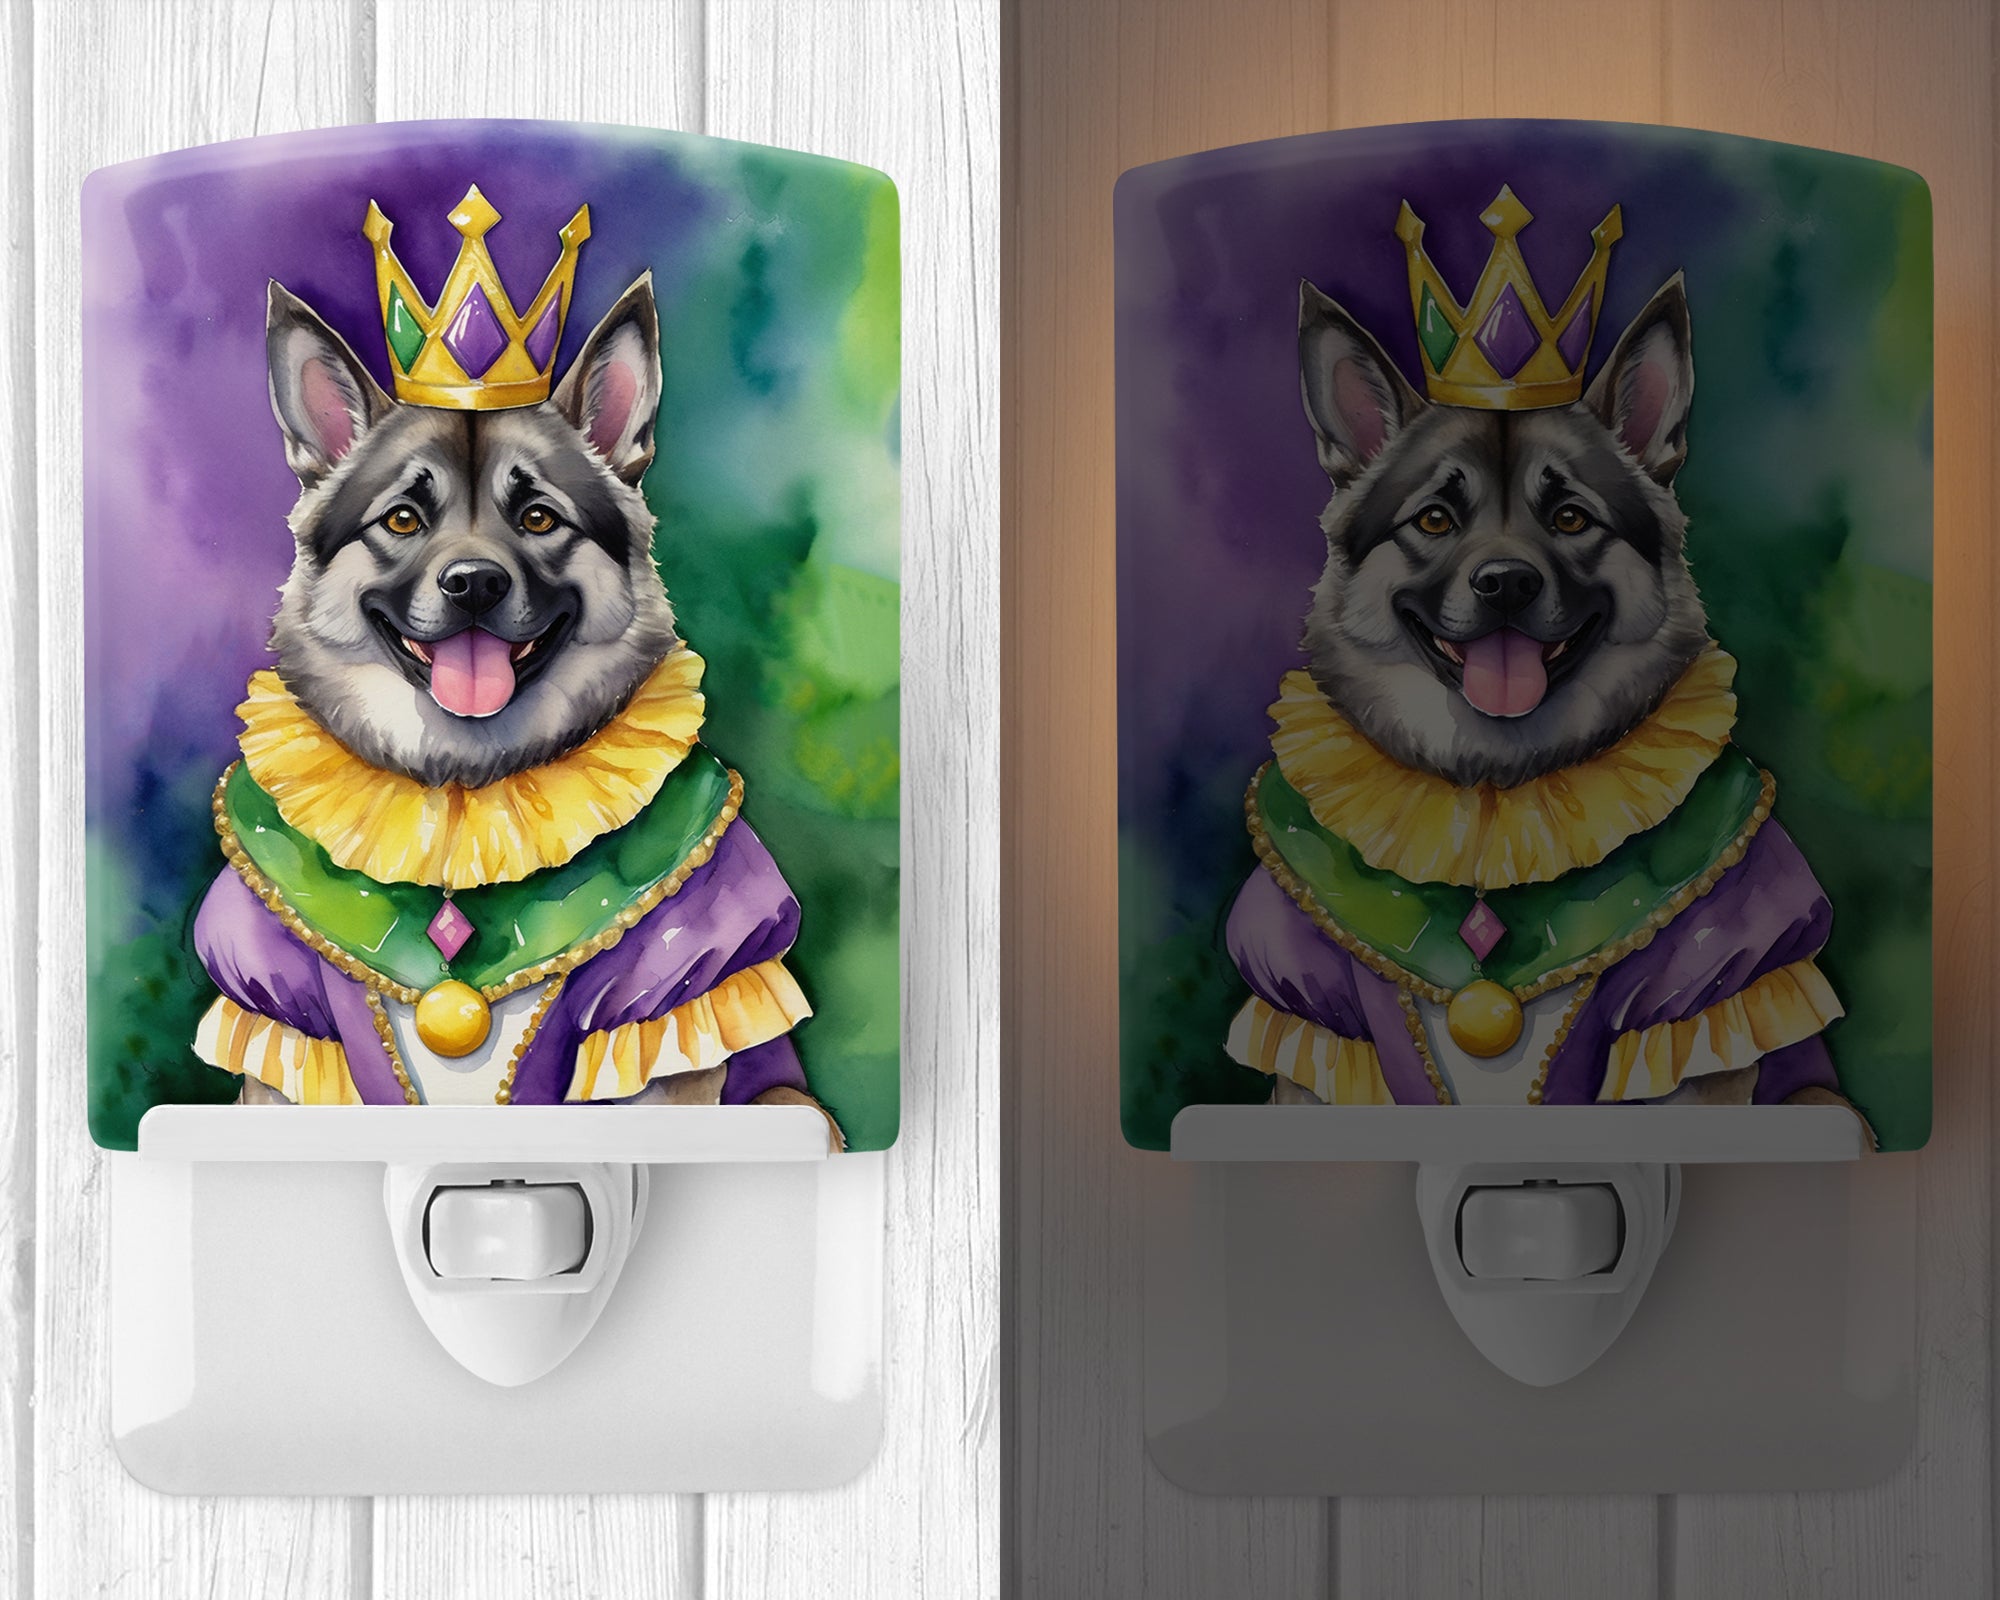 Buy this Norwegian Elkhound King of Mardi Gras Ceramic Night Light